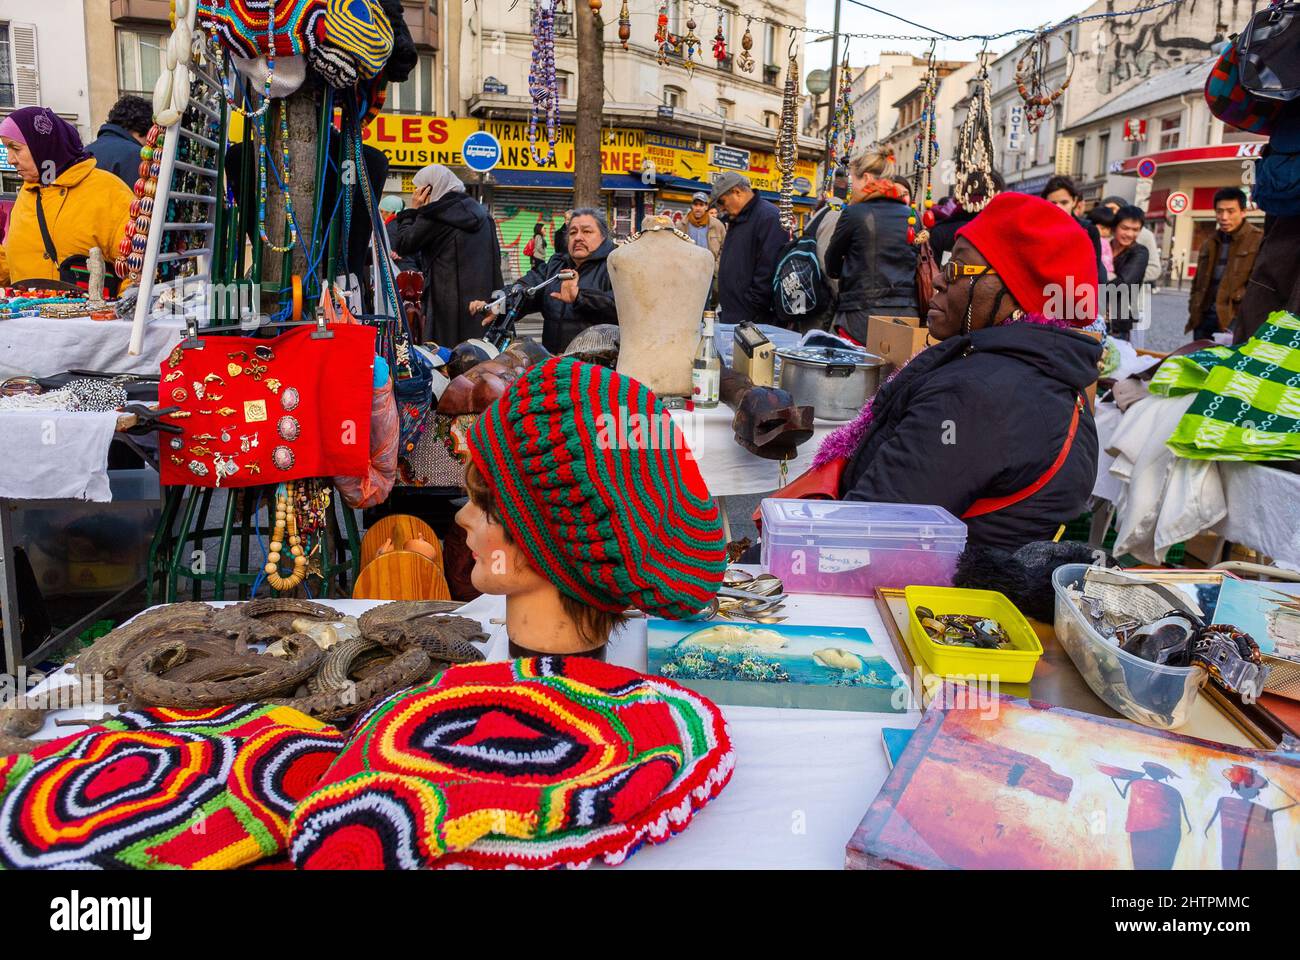 Paris, France, African Woman Selling Handmade Clothing Accessories on Street, Crowd People Shopping, Flea Market on Rue de Belleville, Paris street vendors, shopping tourism fashion Stock Photo